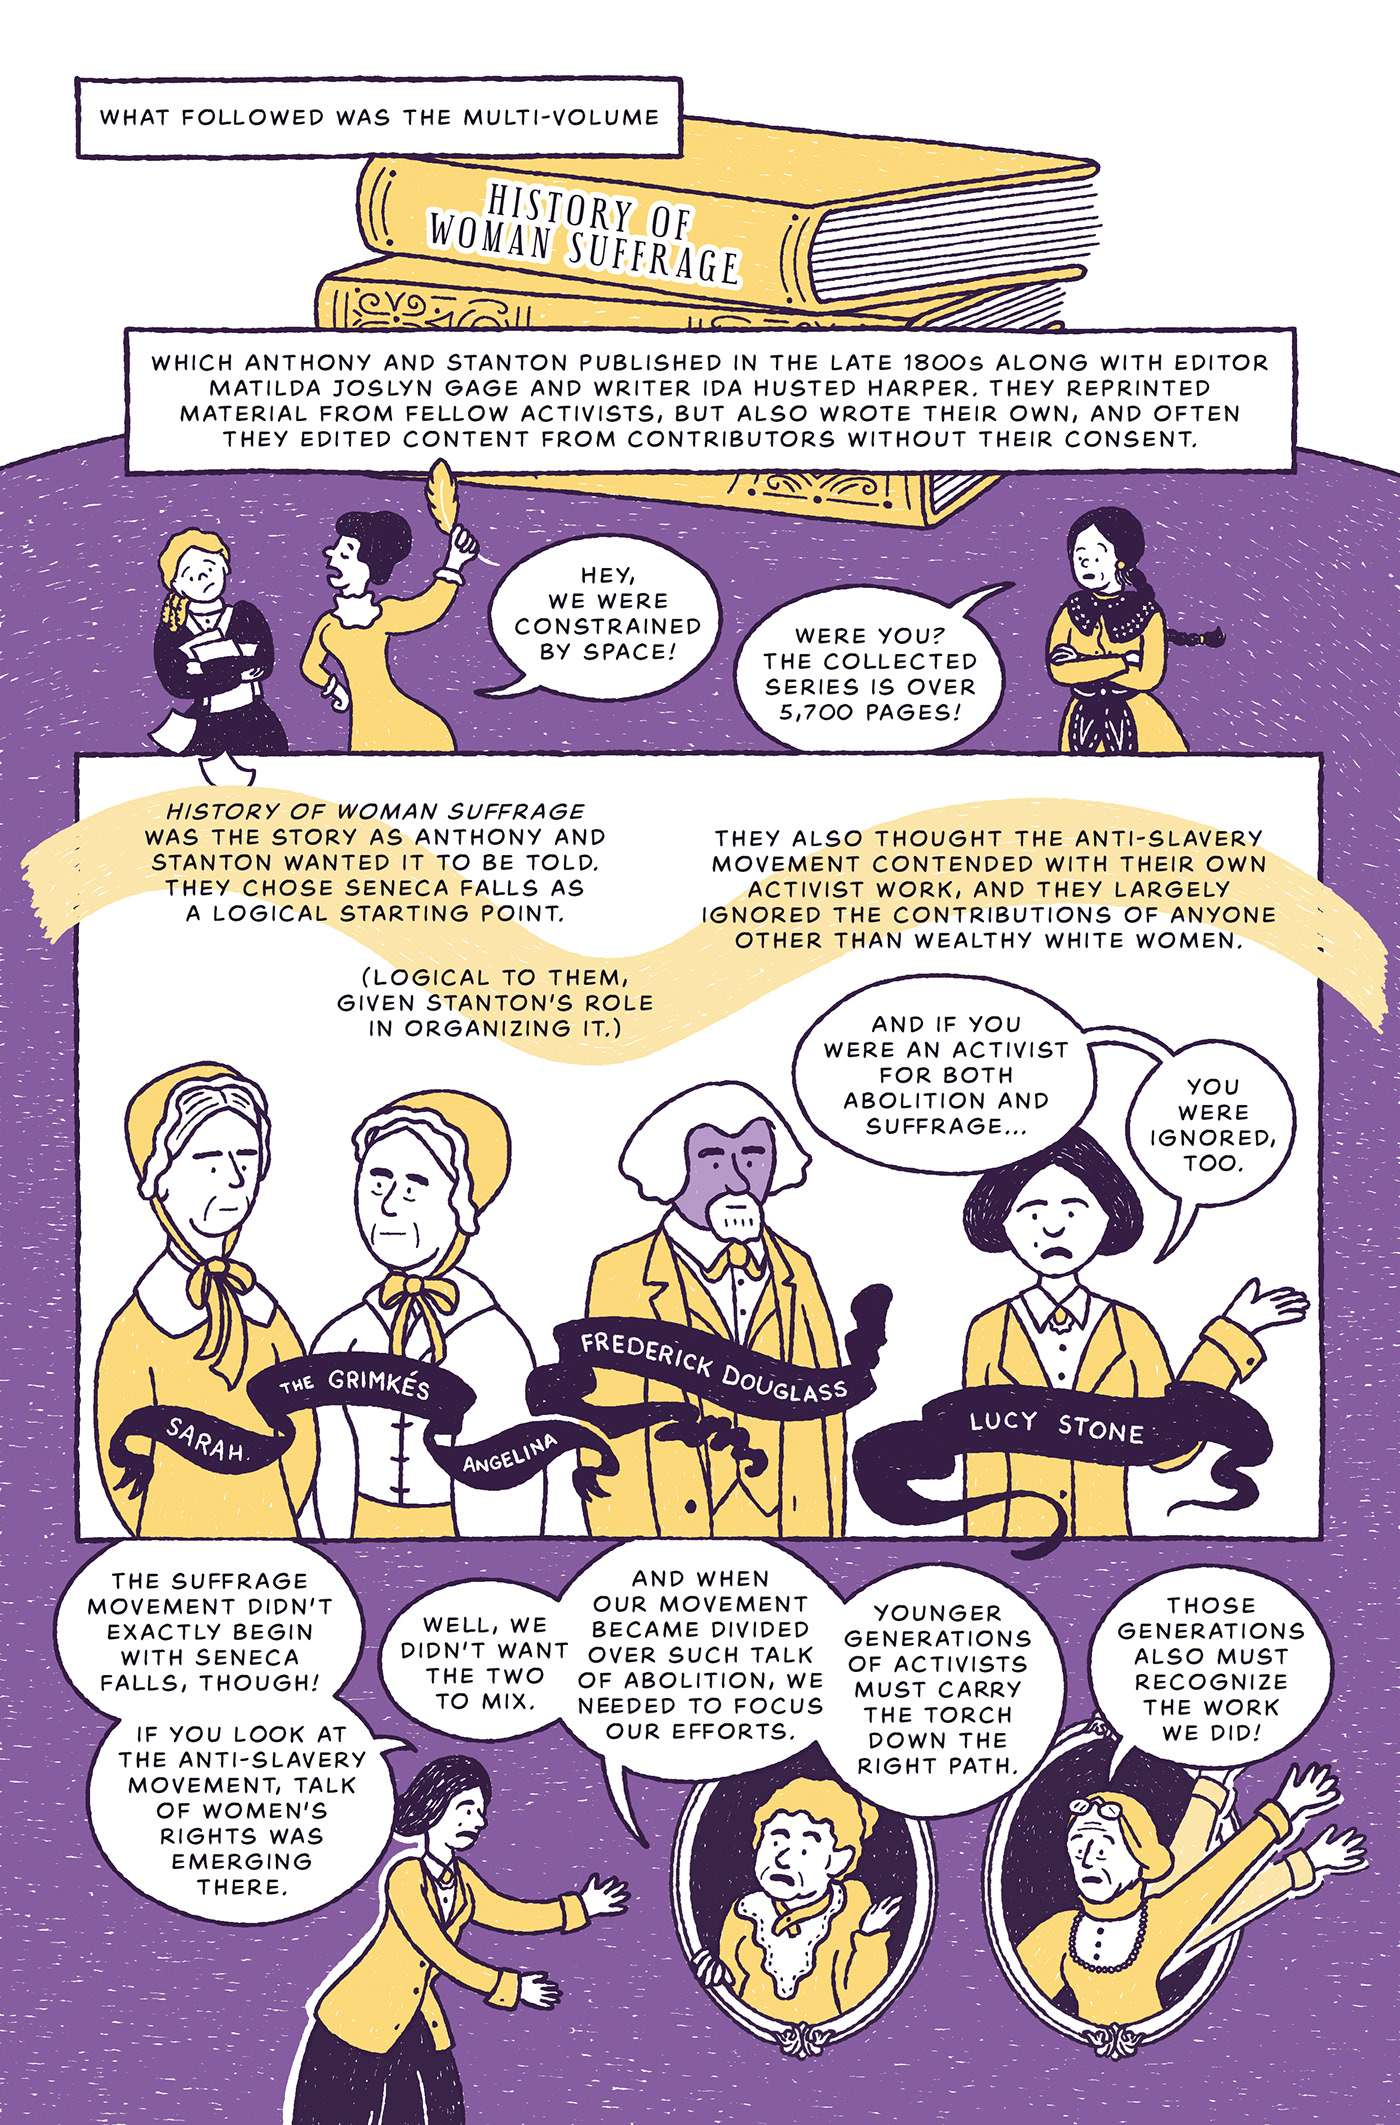 19th amendment Anthology comics NonFiction Suffrage U.S. history voting women's history women's rights